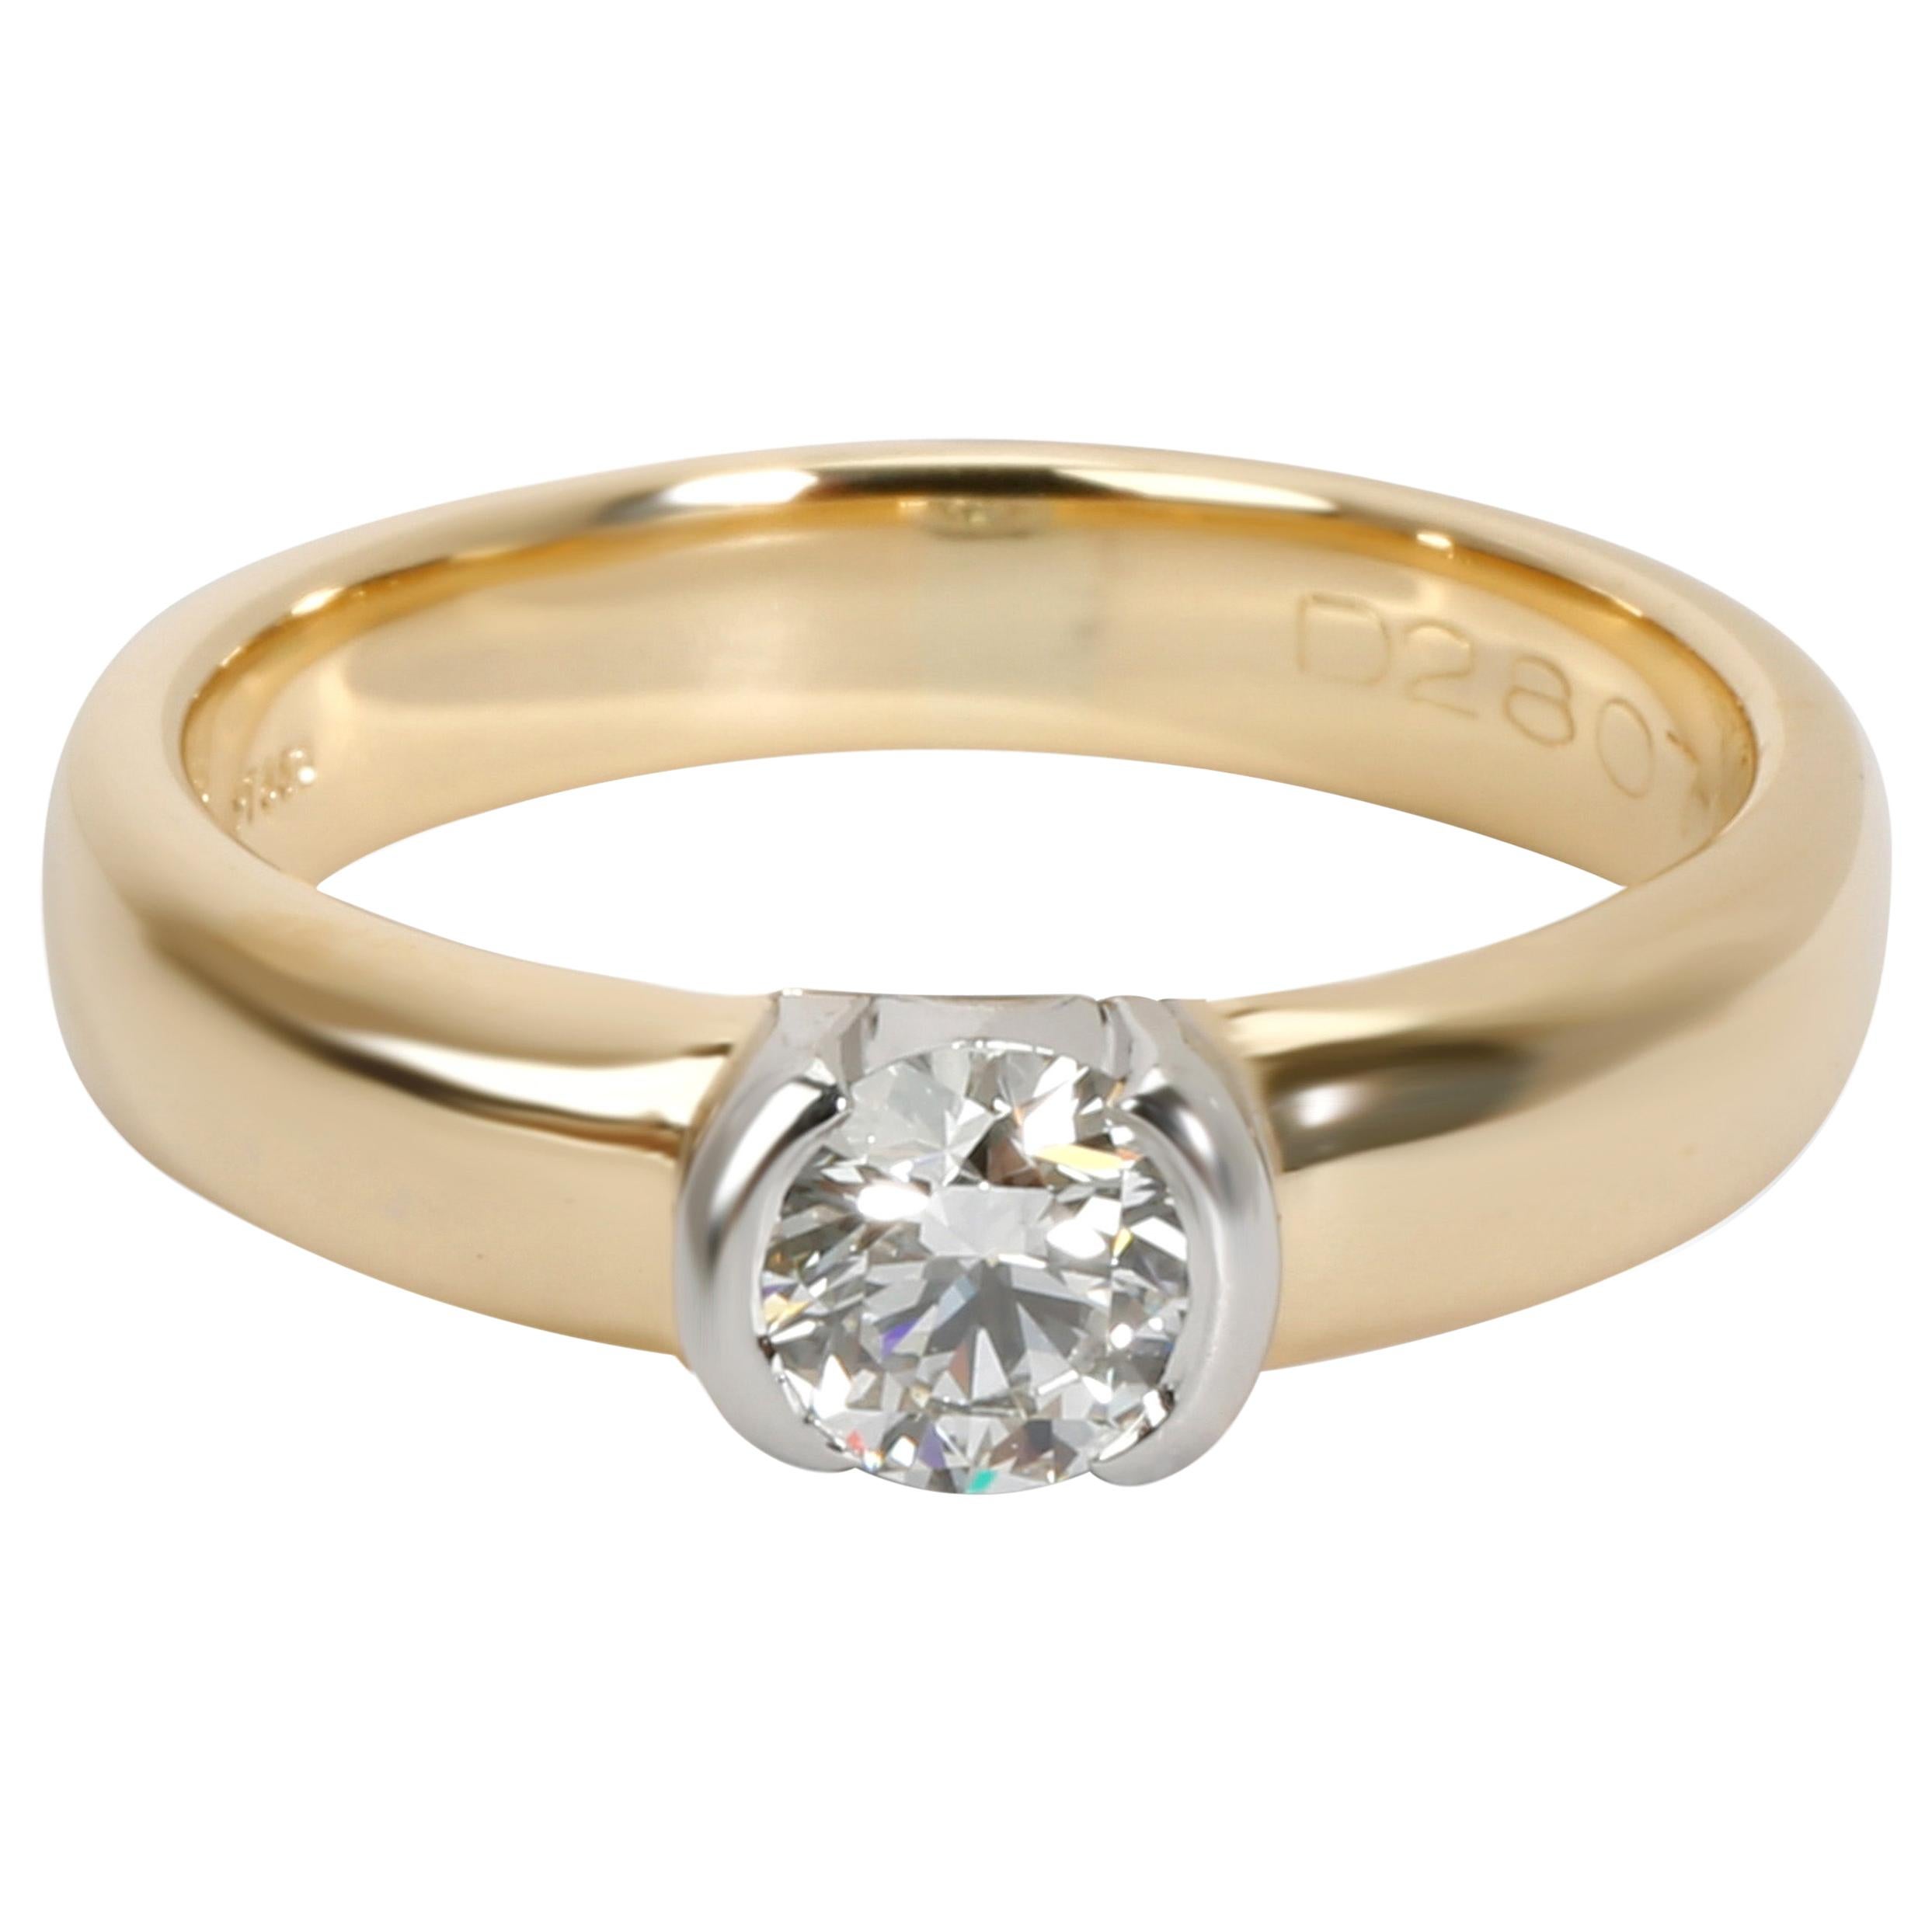 Tiffany & Co. Semi Bezel Diamond Ring in 18 Karat 2-Tone Gold 0.35 Carat